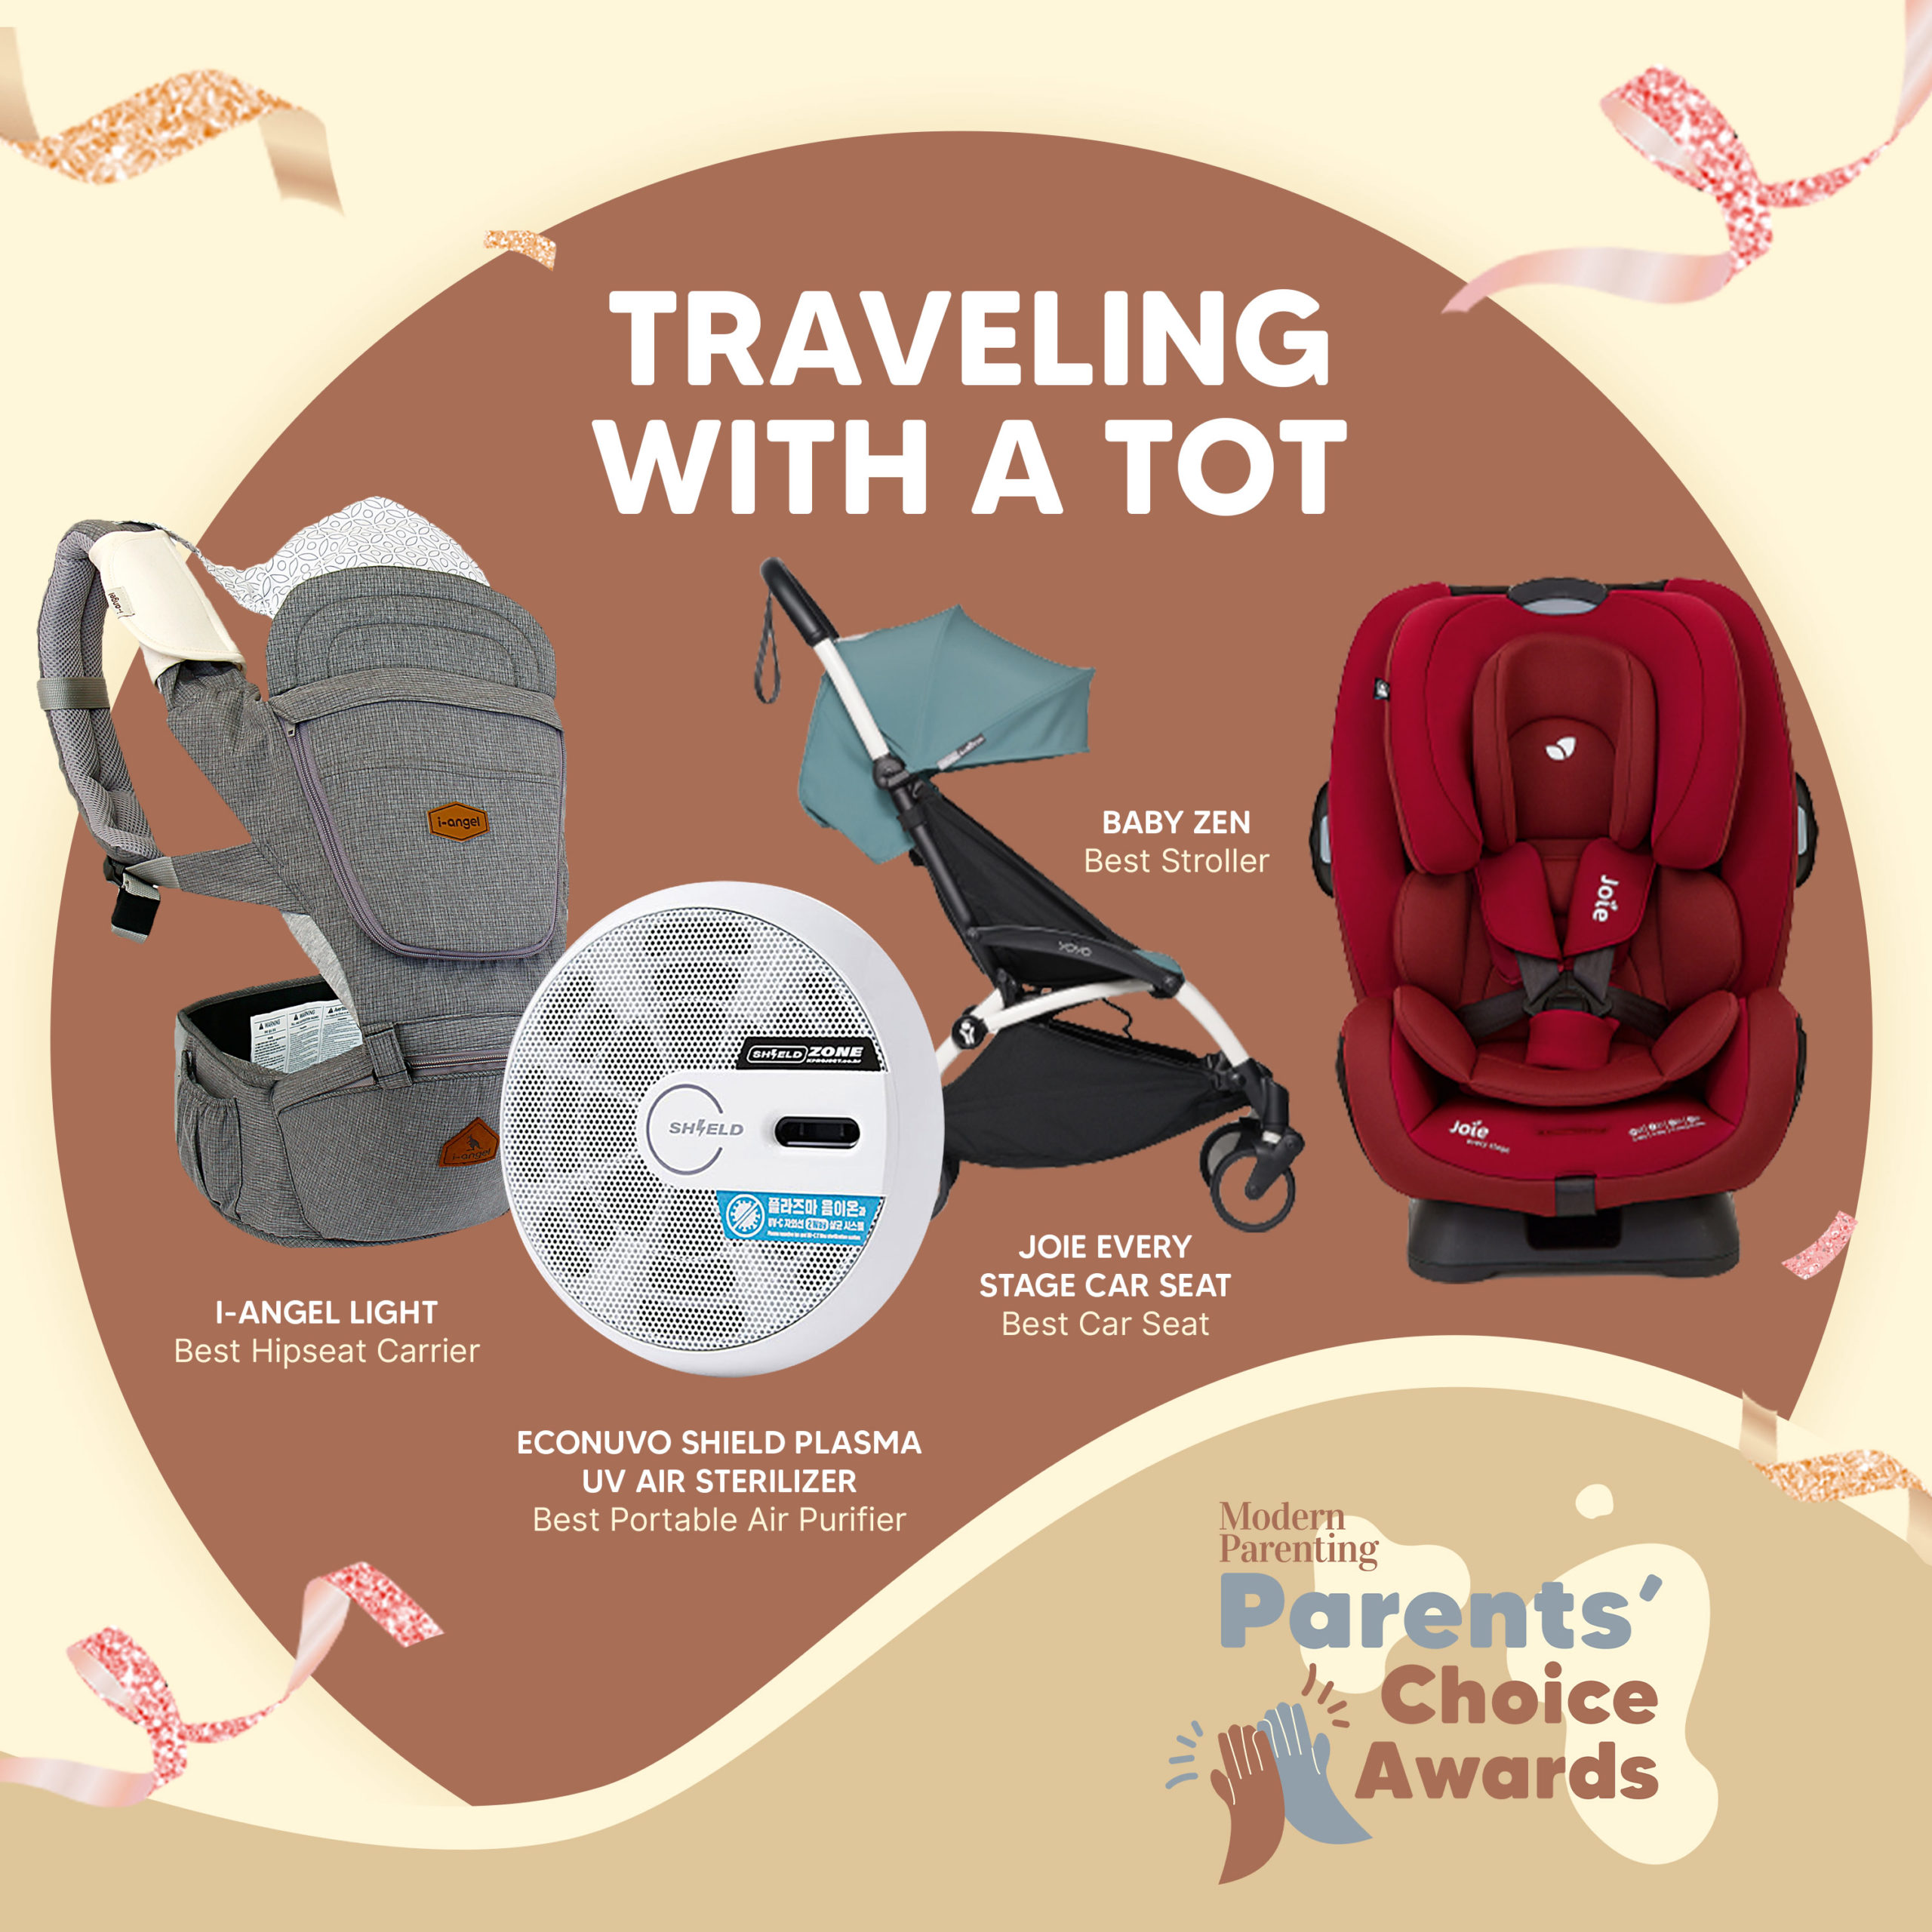 The Modern Parenting Travel Essentials